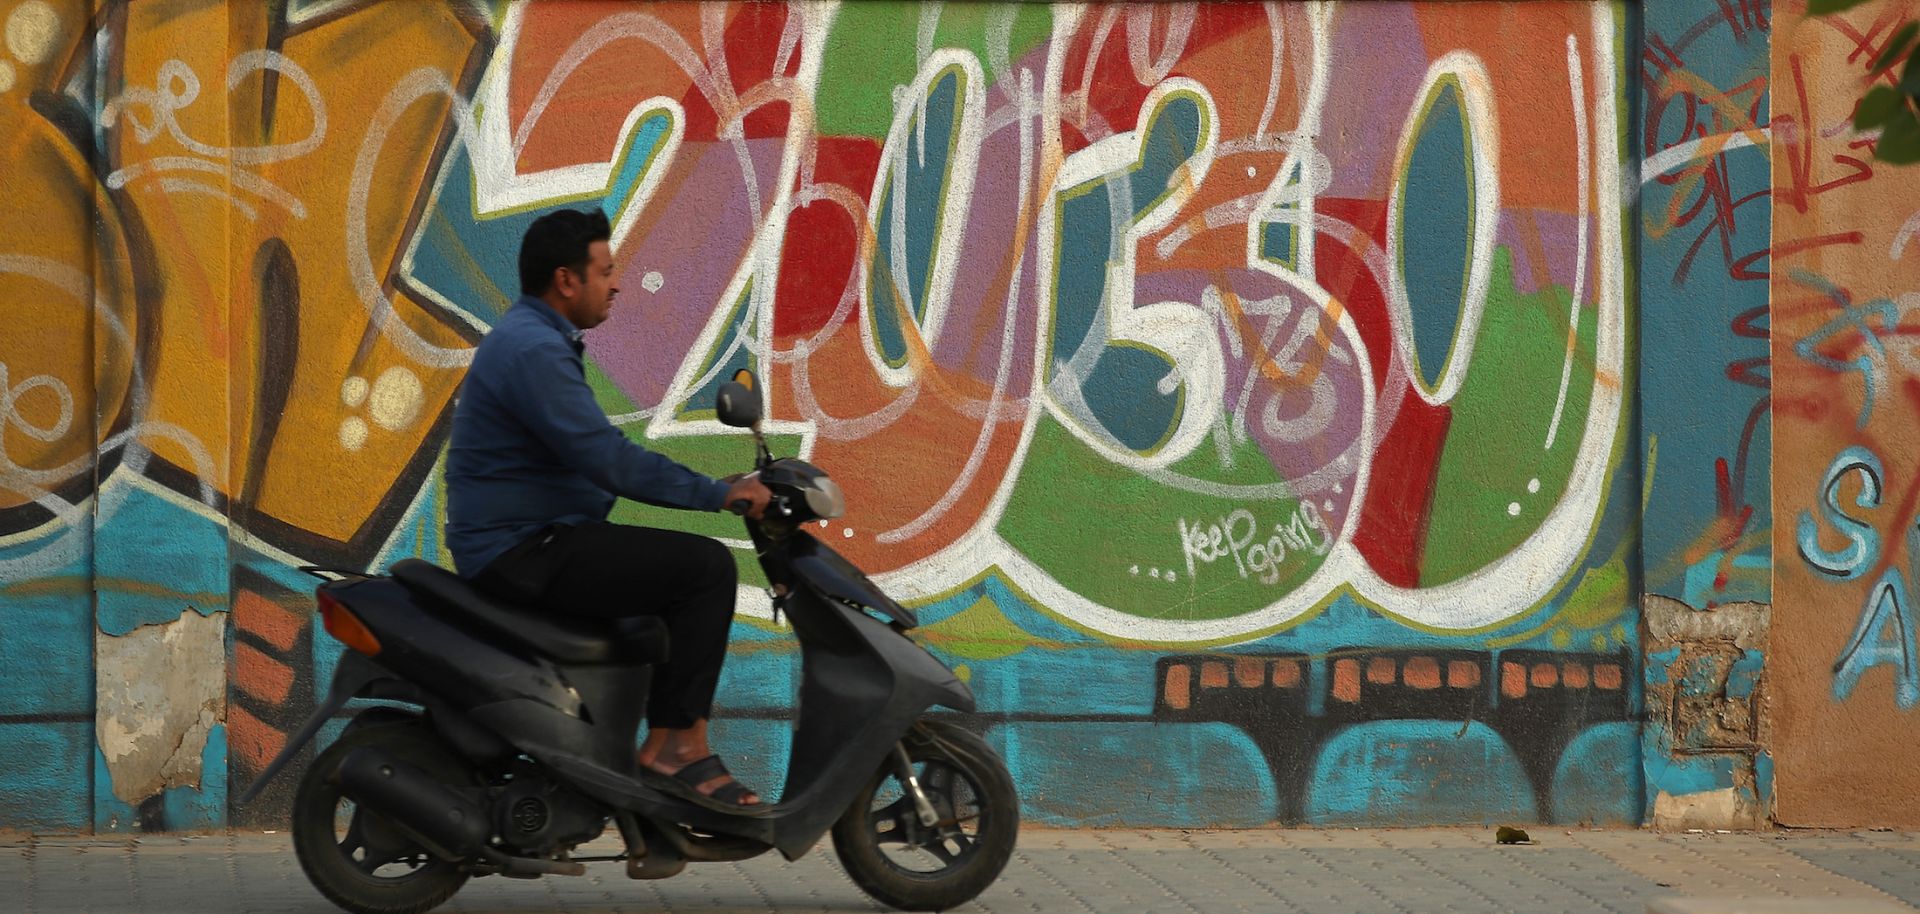 A man rides past graffiti alluding to Vision 2030